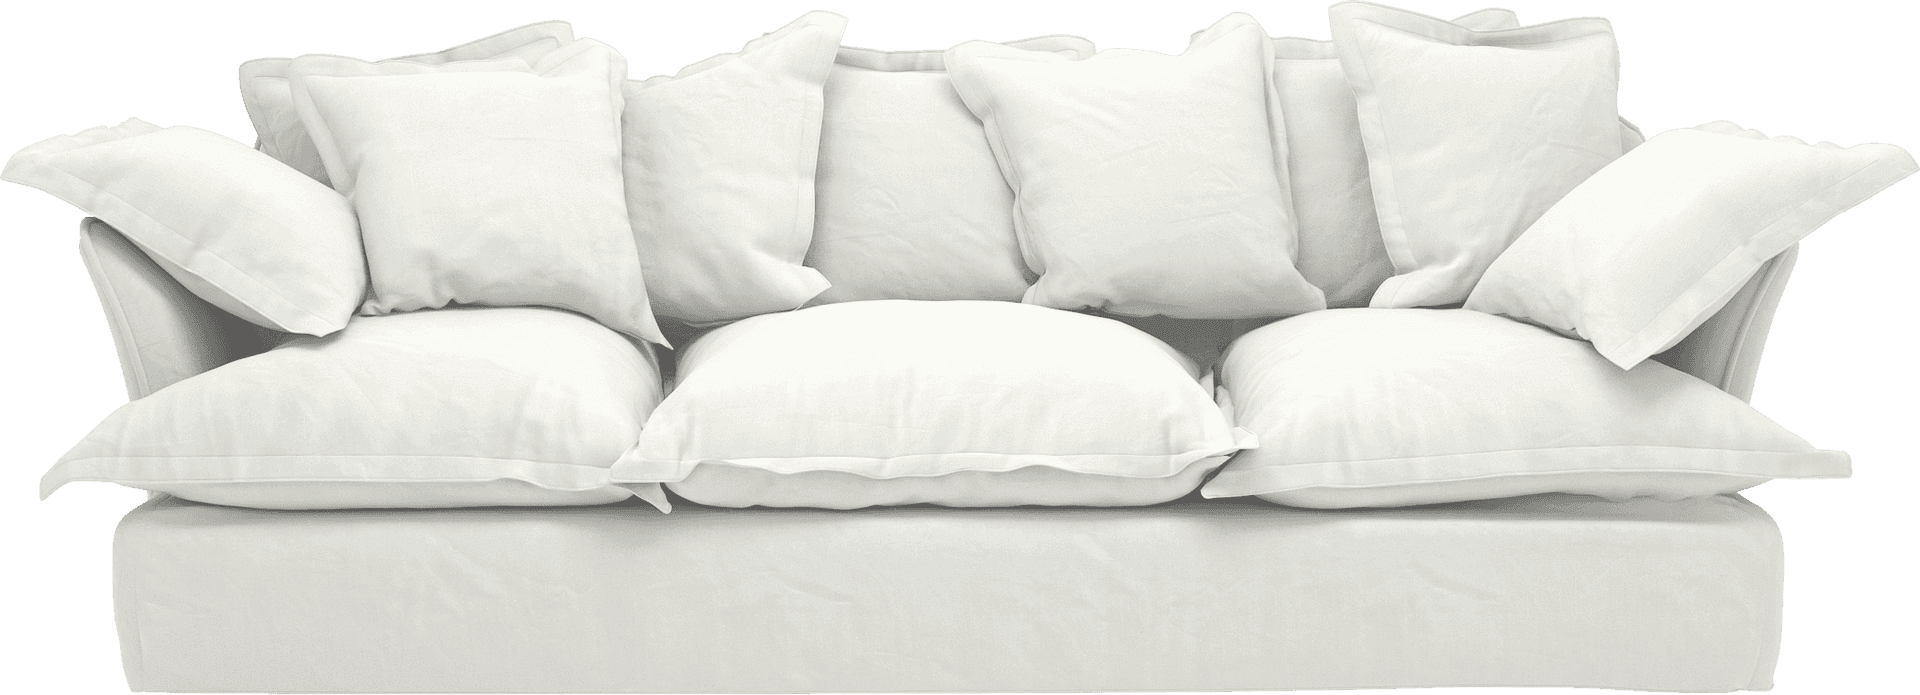 White Plush Cushioned Sofa PNG image